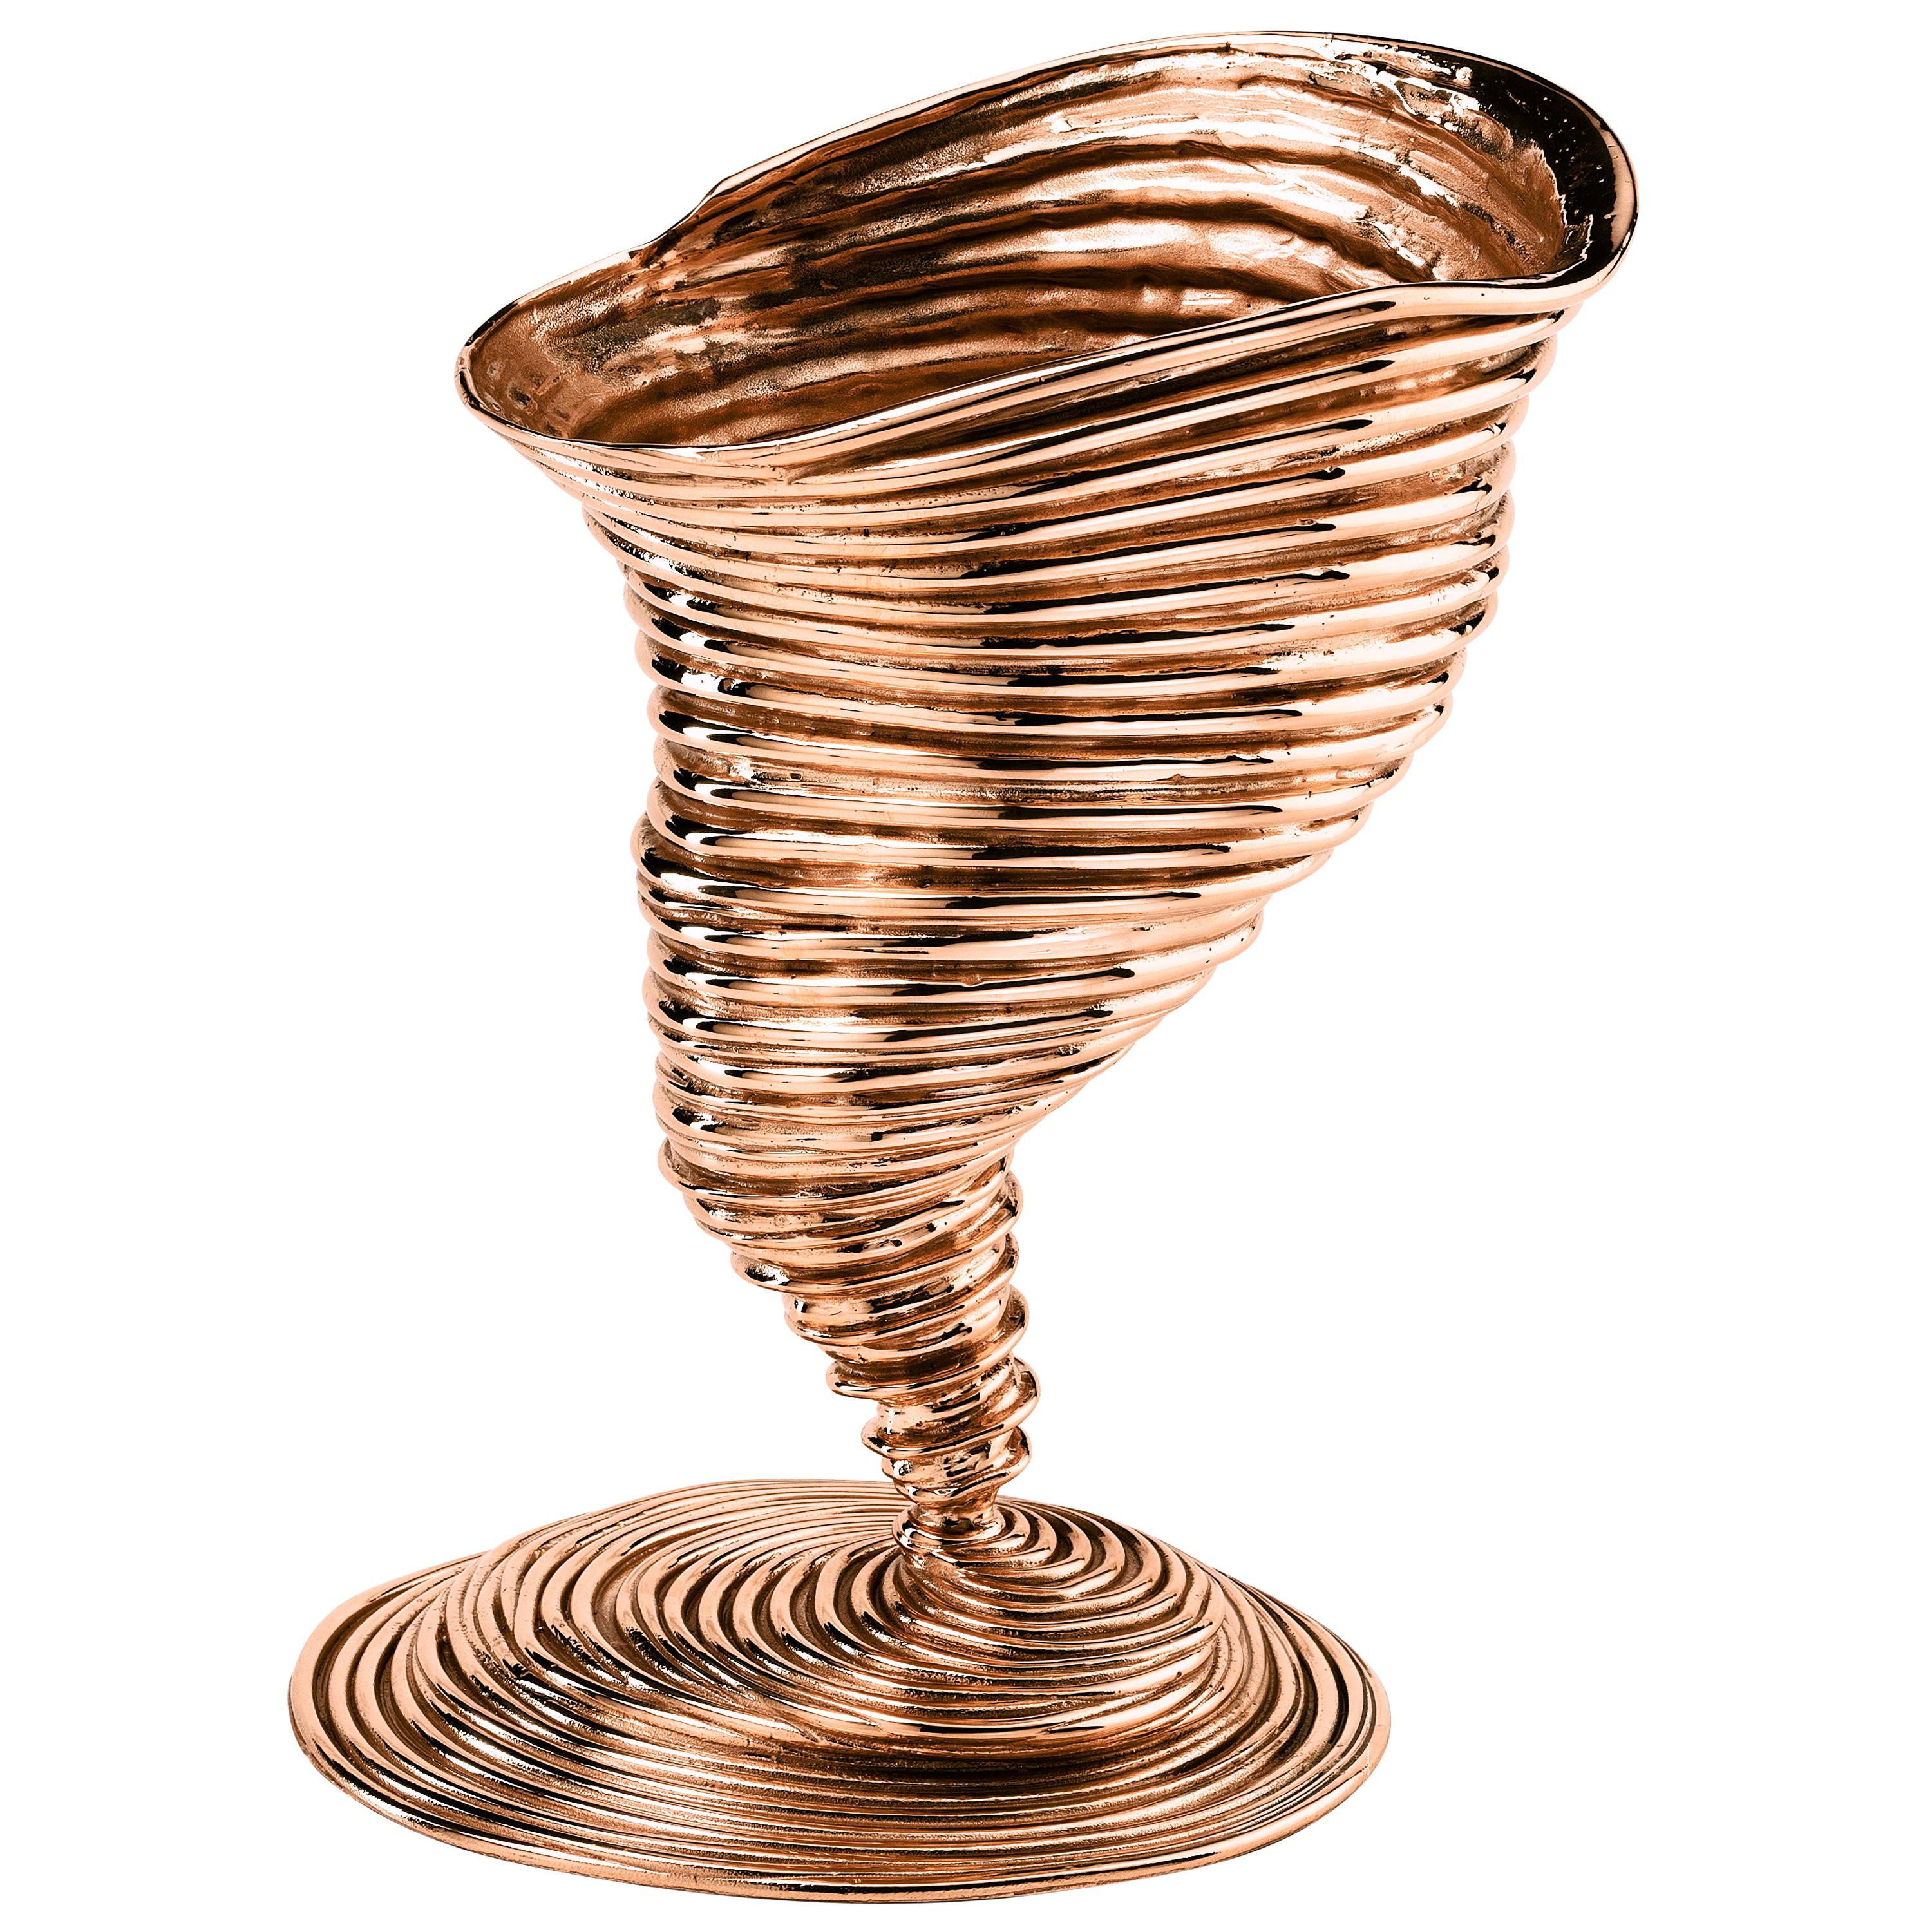 Ghidini 1961 Tornado Sculptural Vase in Bronze by Campana Brothers